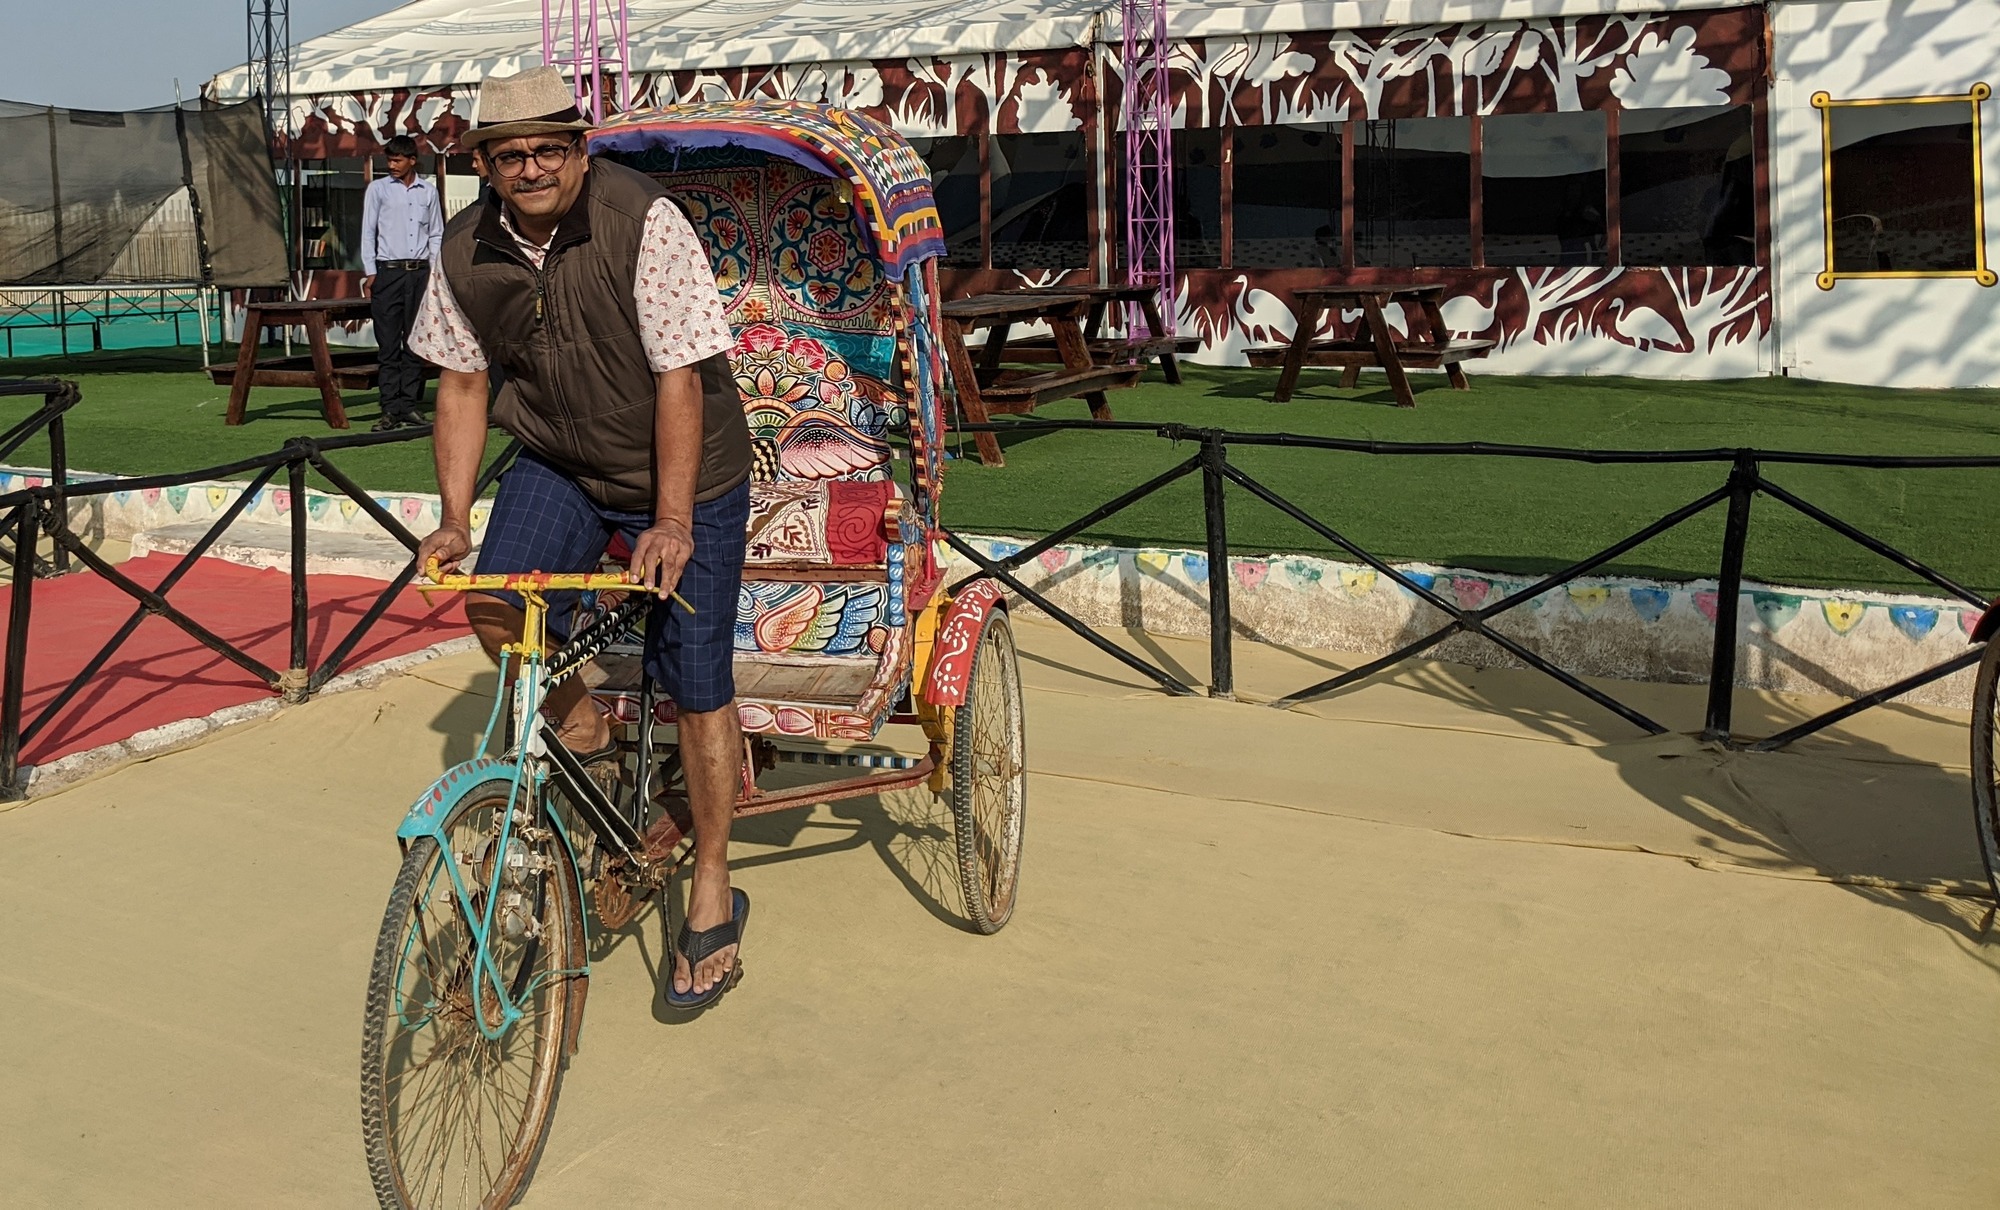 My morning ride - Cycle Rickshaw in display